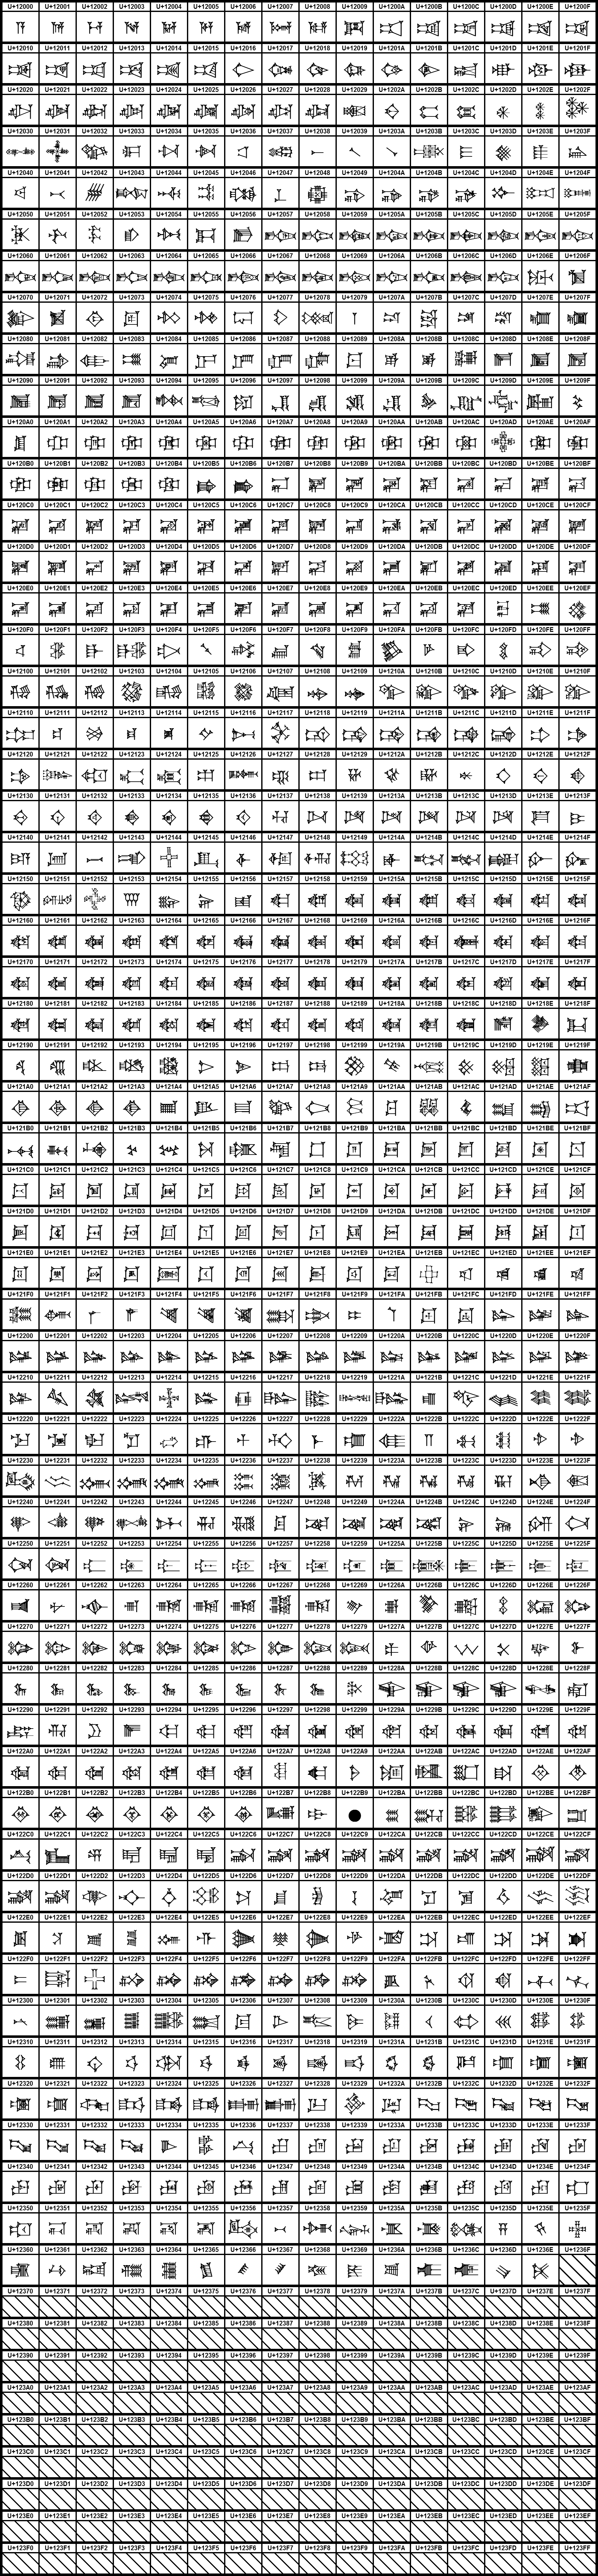 UCB Cuneiform.png